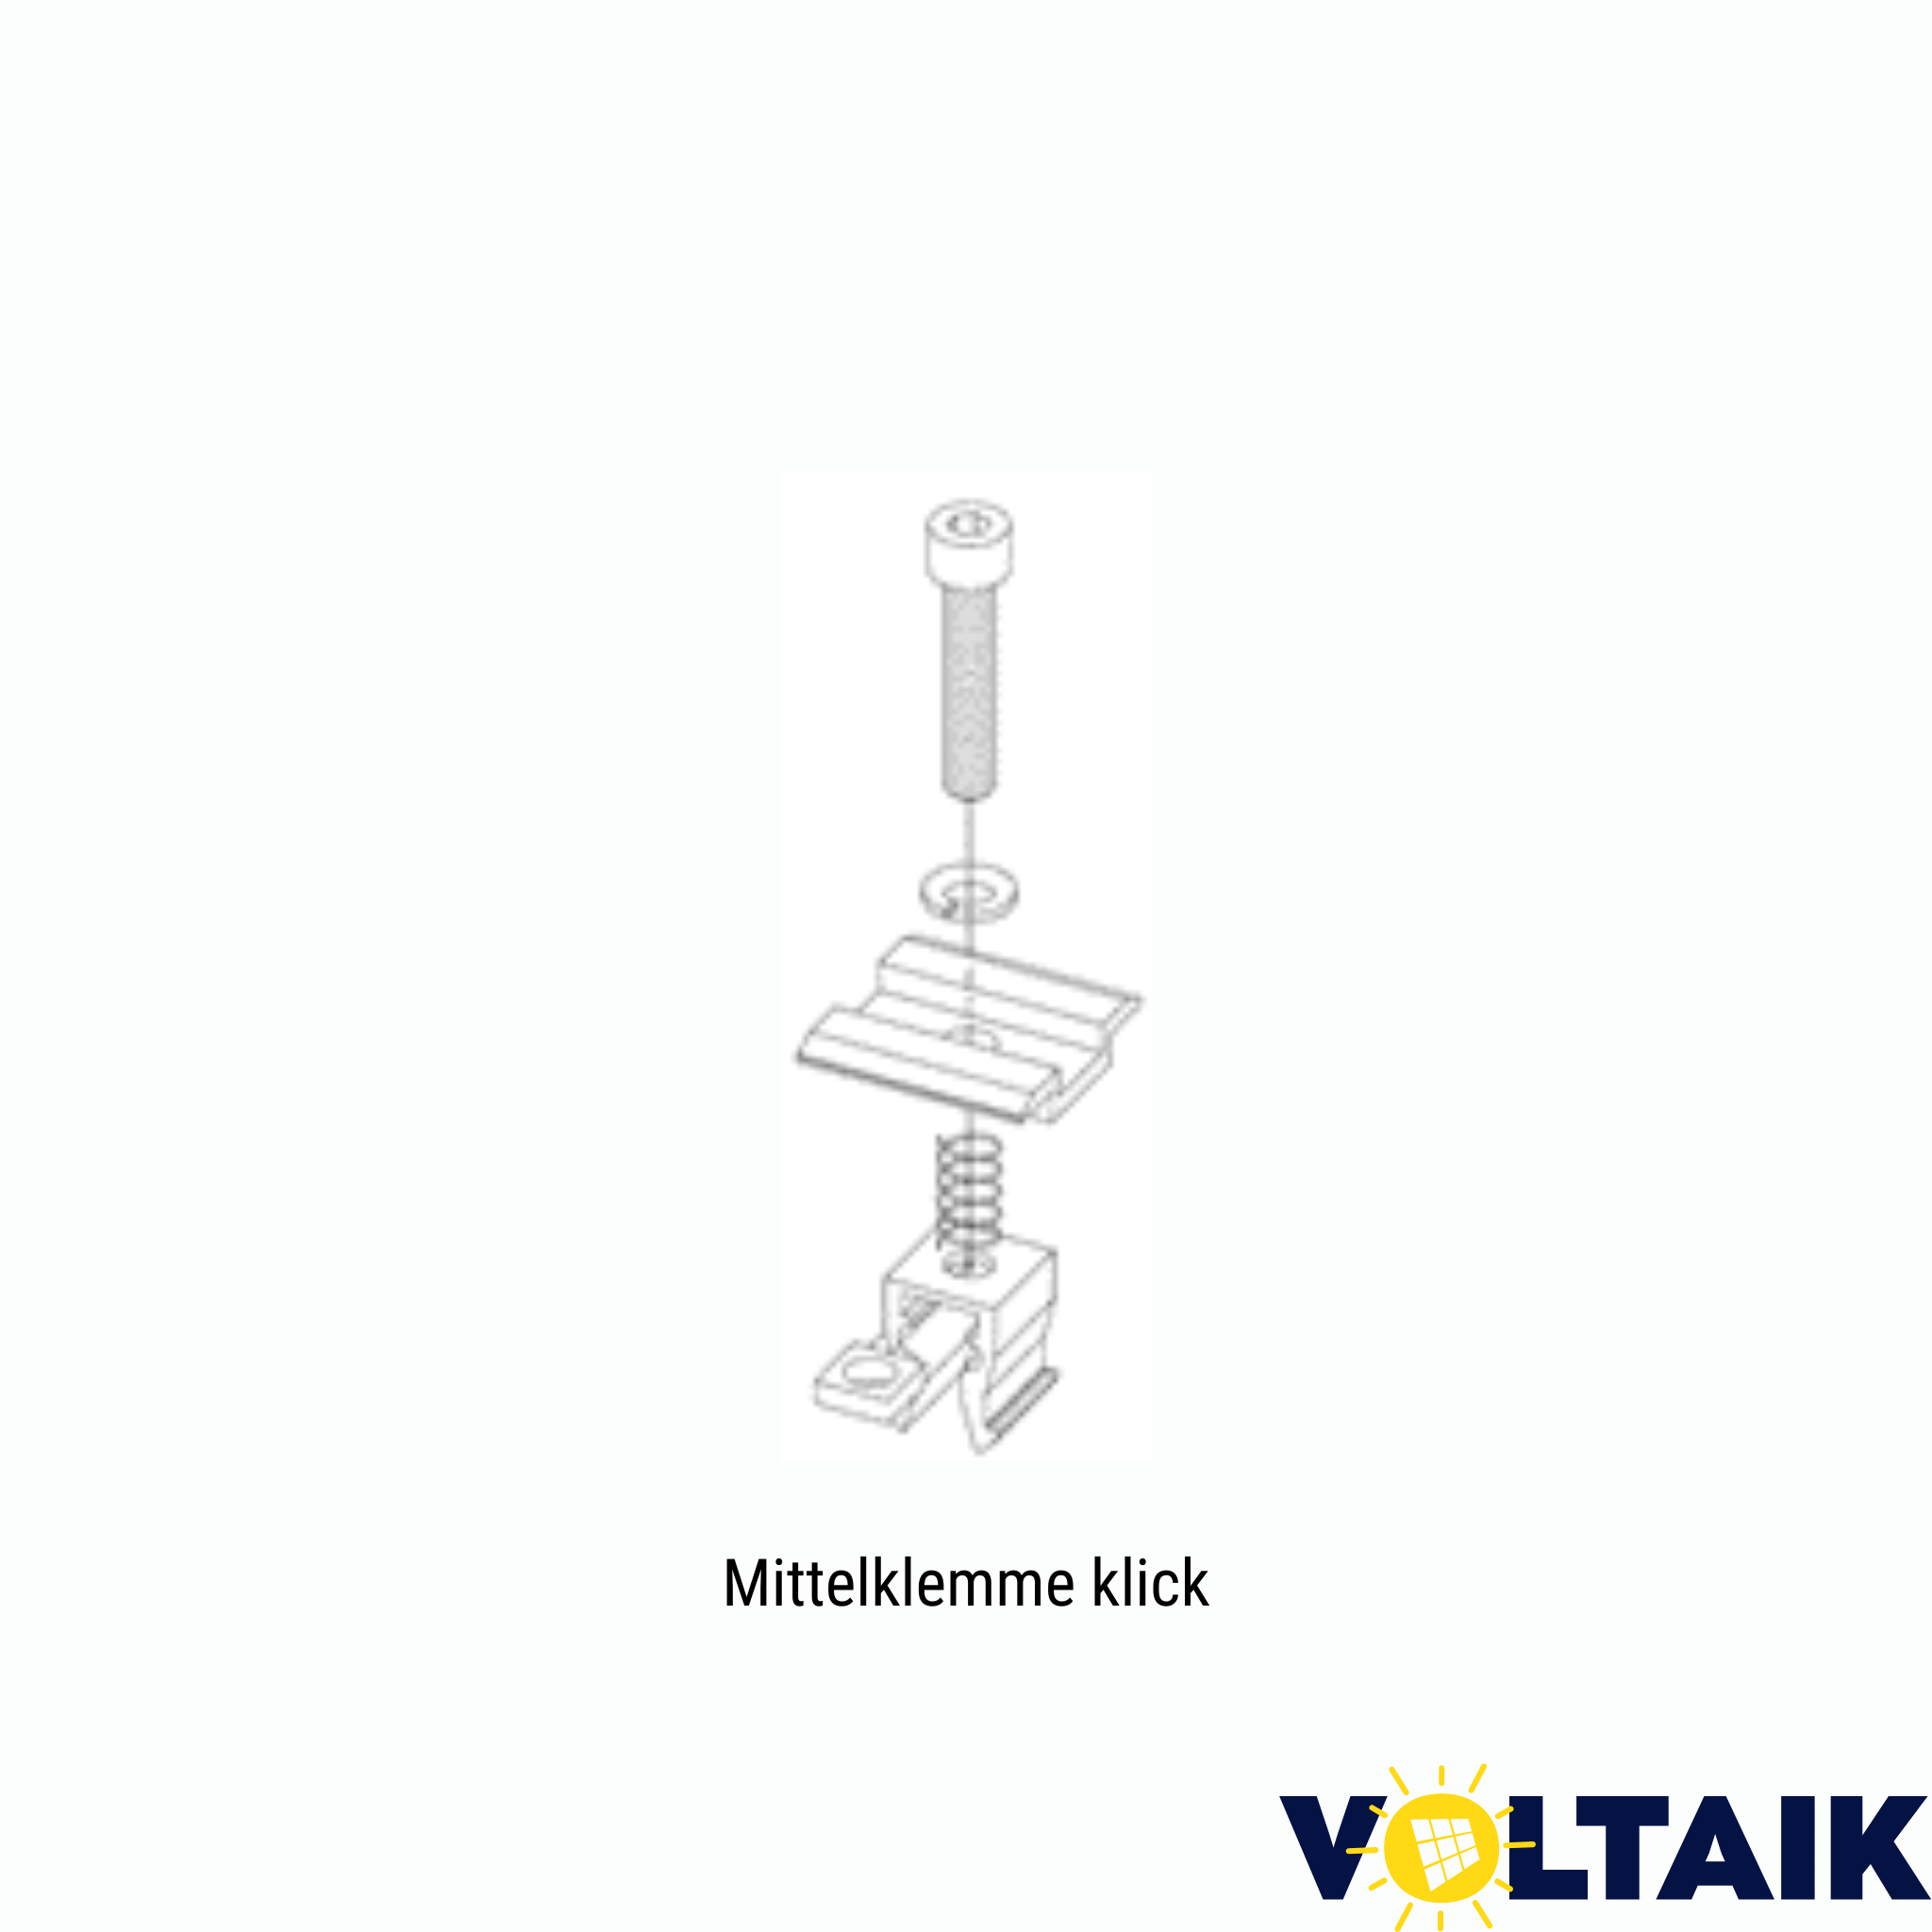 Modulklemmen Rapid Klick - Endklemmen / Mittelklemmen (schwarz) 32-40mm - Voltaik.shop